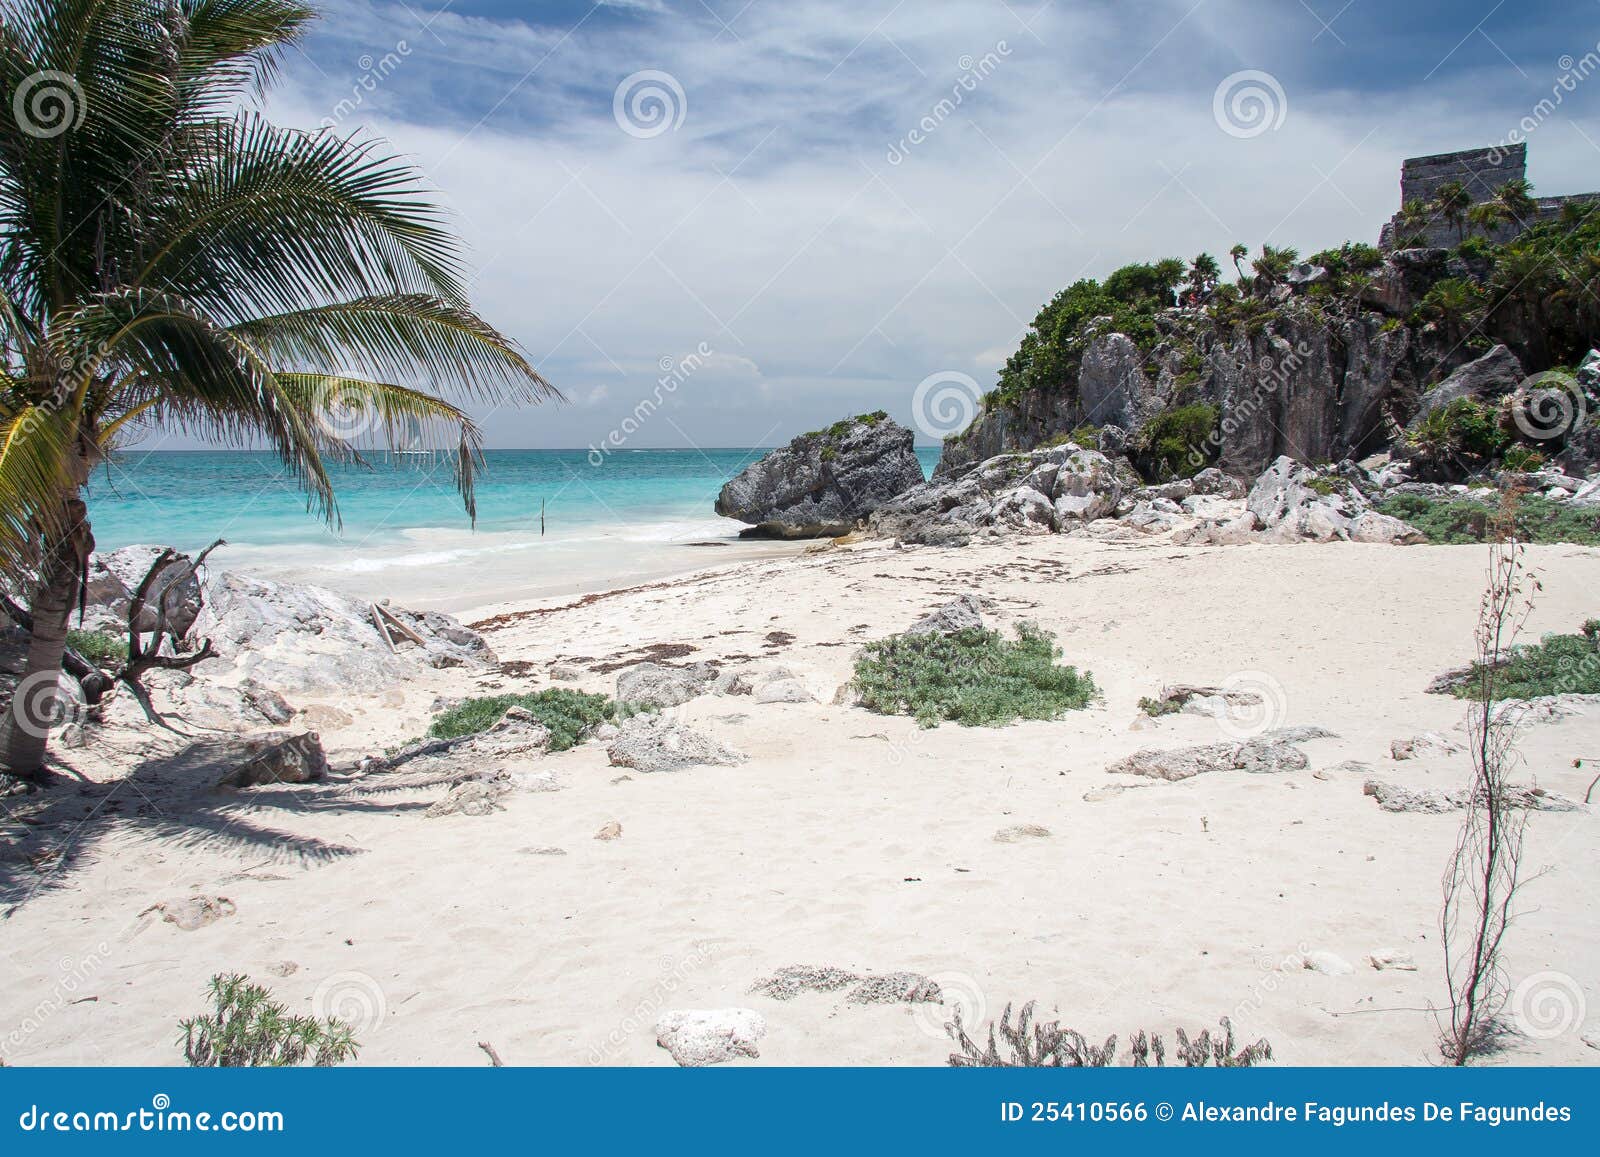 turtle beach tulum yucatan peninsula mexico